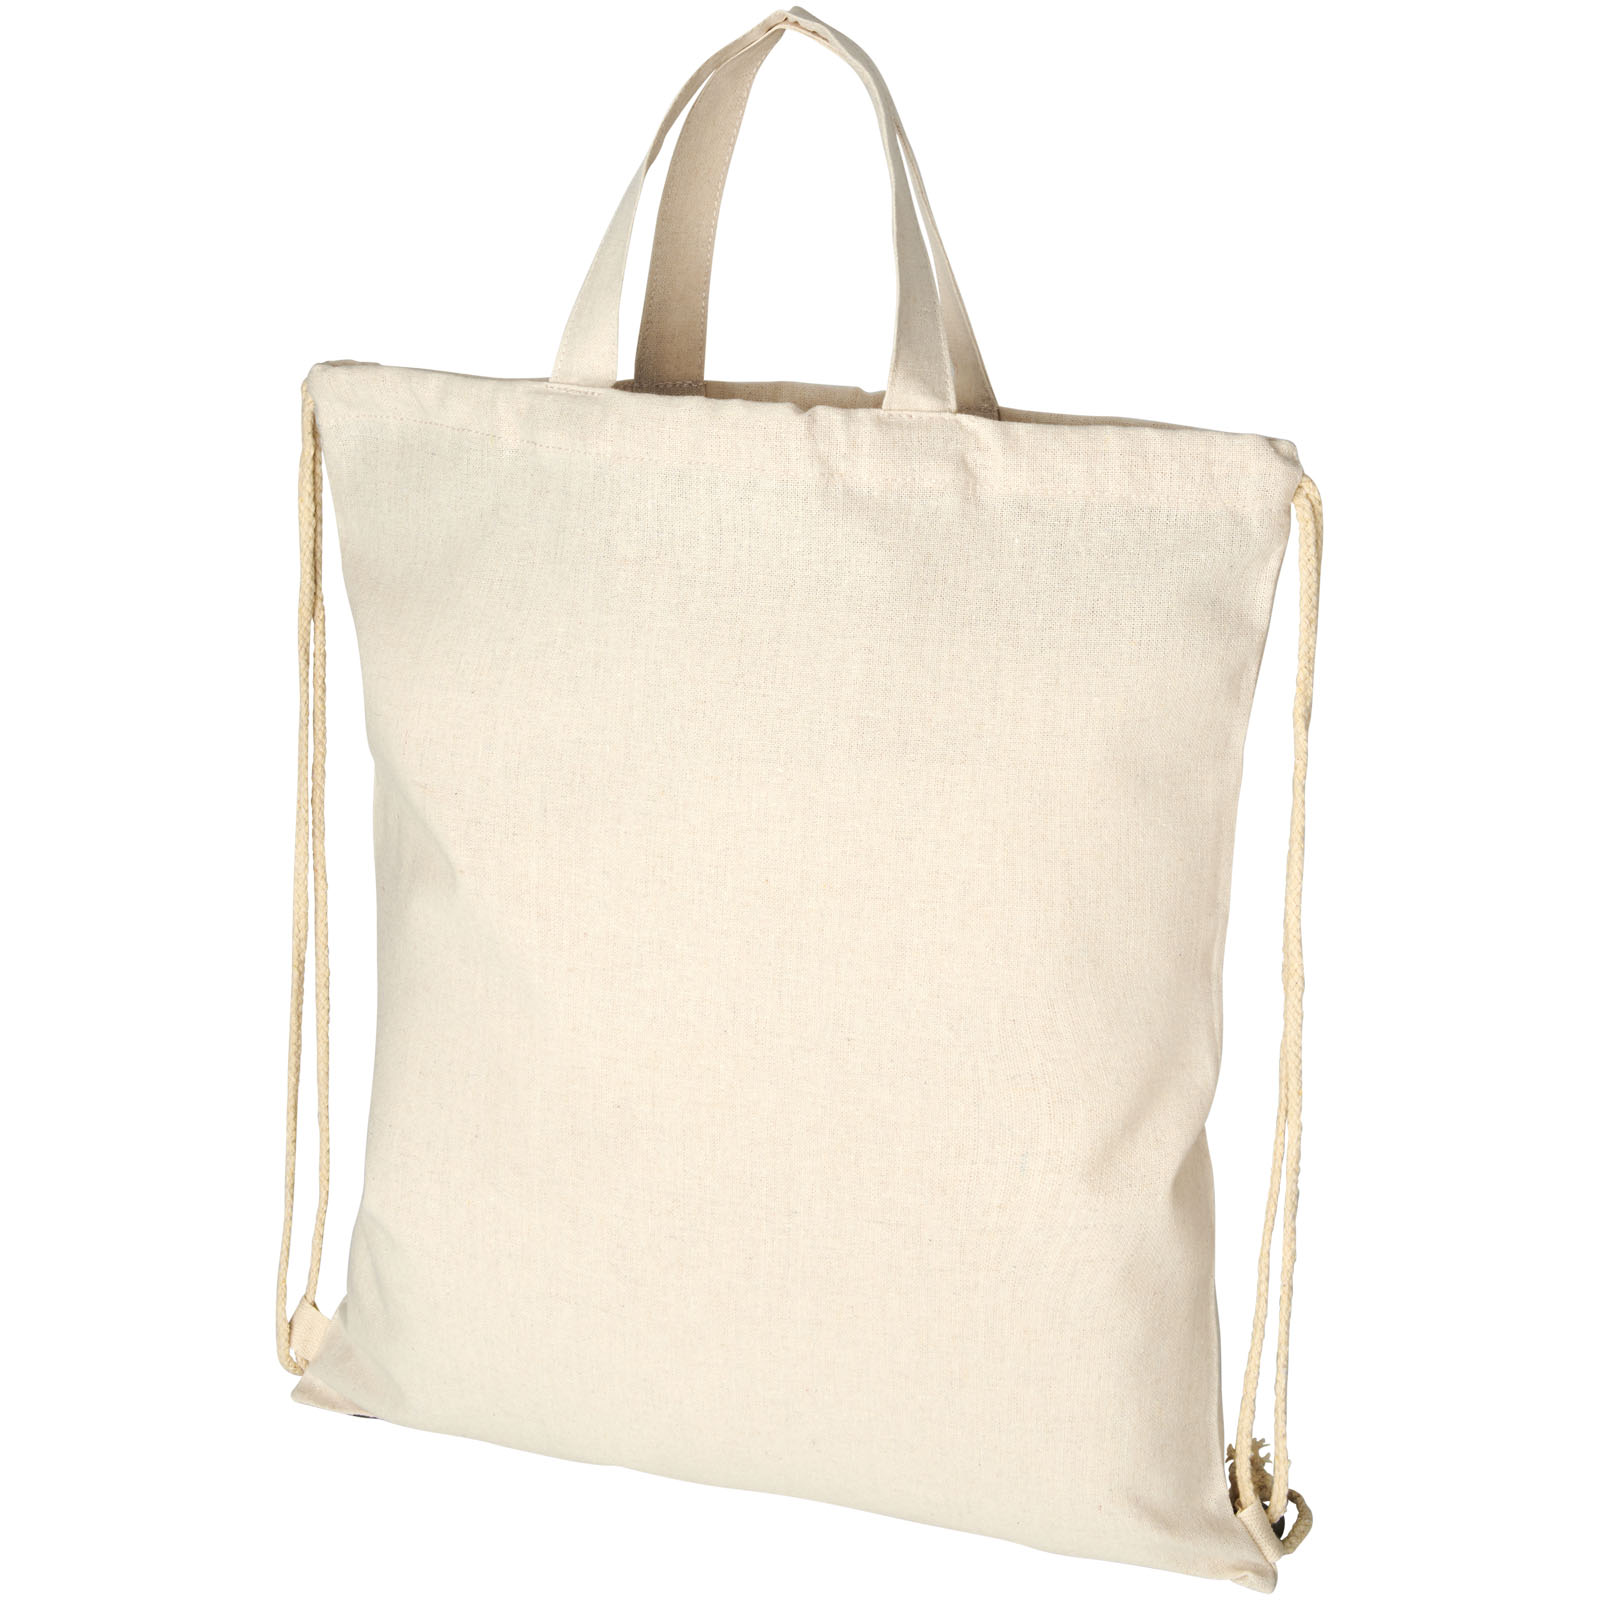 Advertising Drawstring Bags - Pheebs 210 g/m² recycled drawstring bag 6L - 0